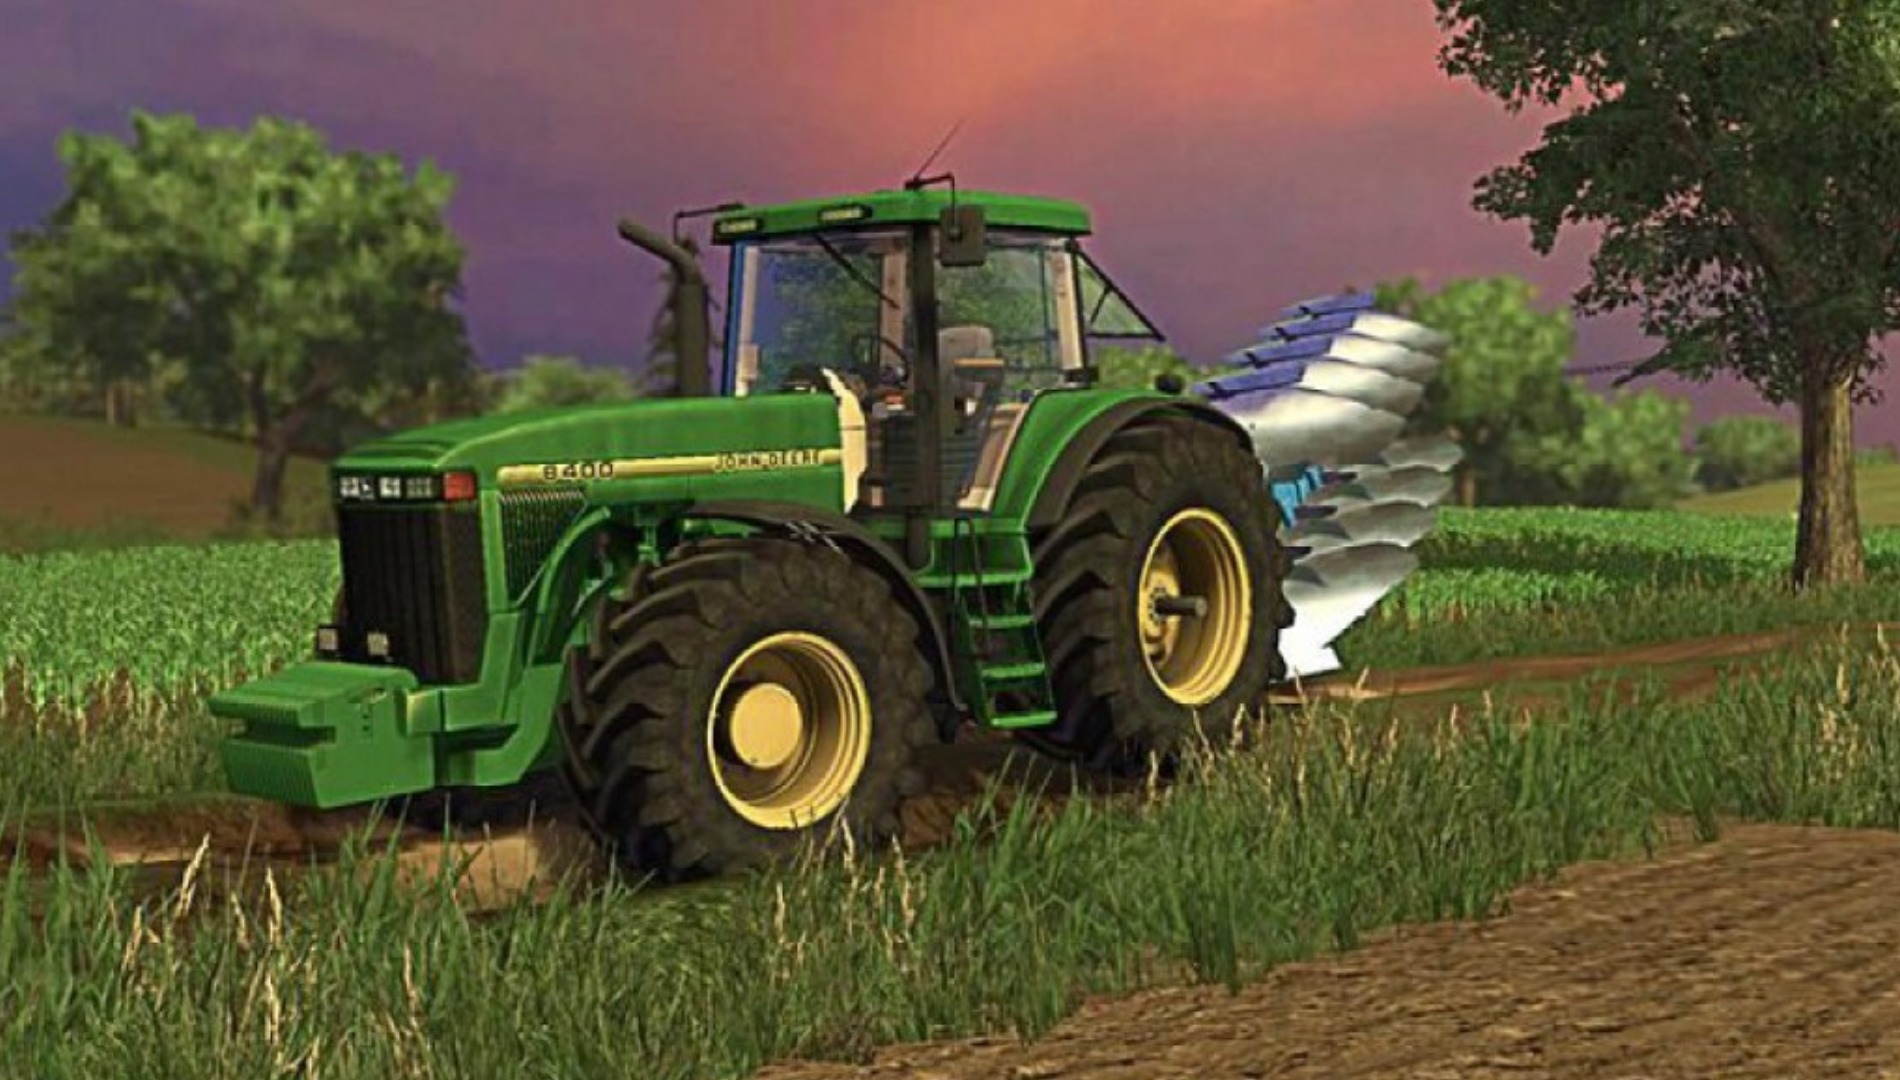 FS17 John Deere 8400 v1.0 - FS 17 Tractors Mod Download.